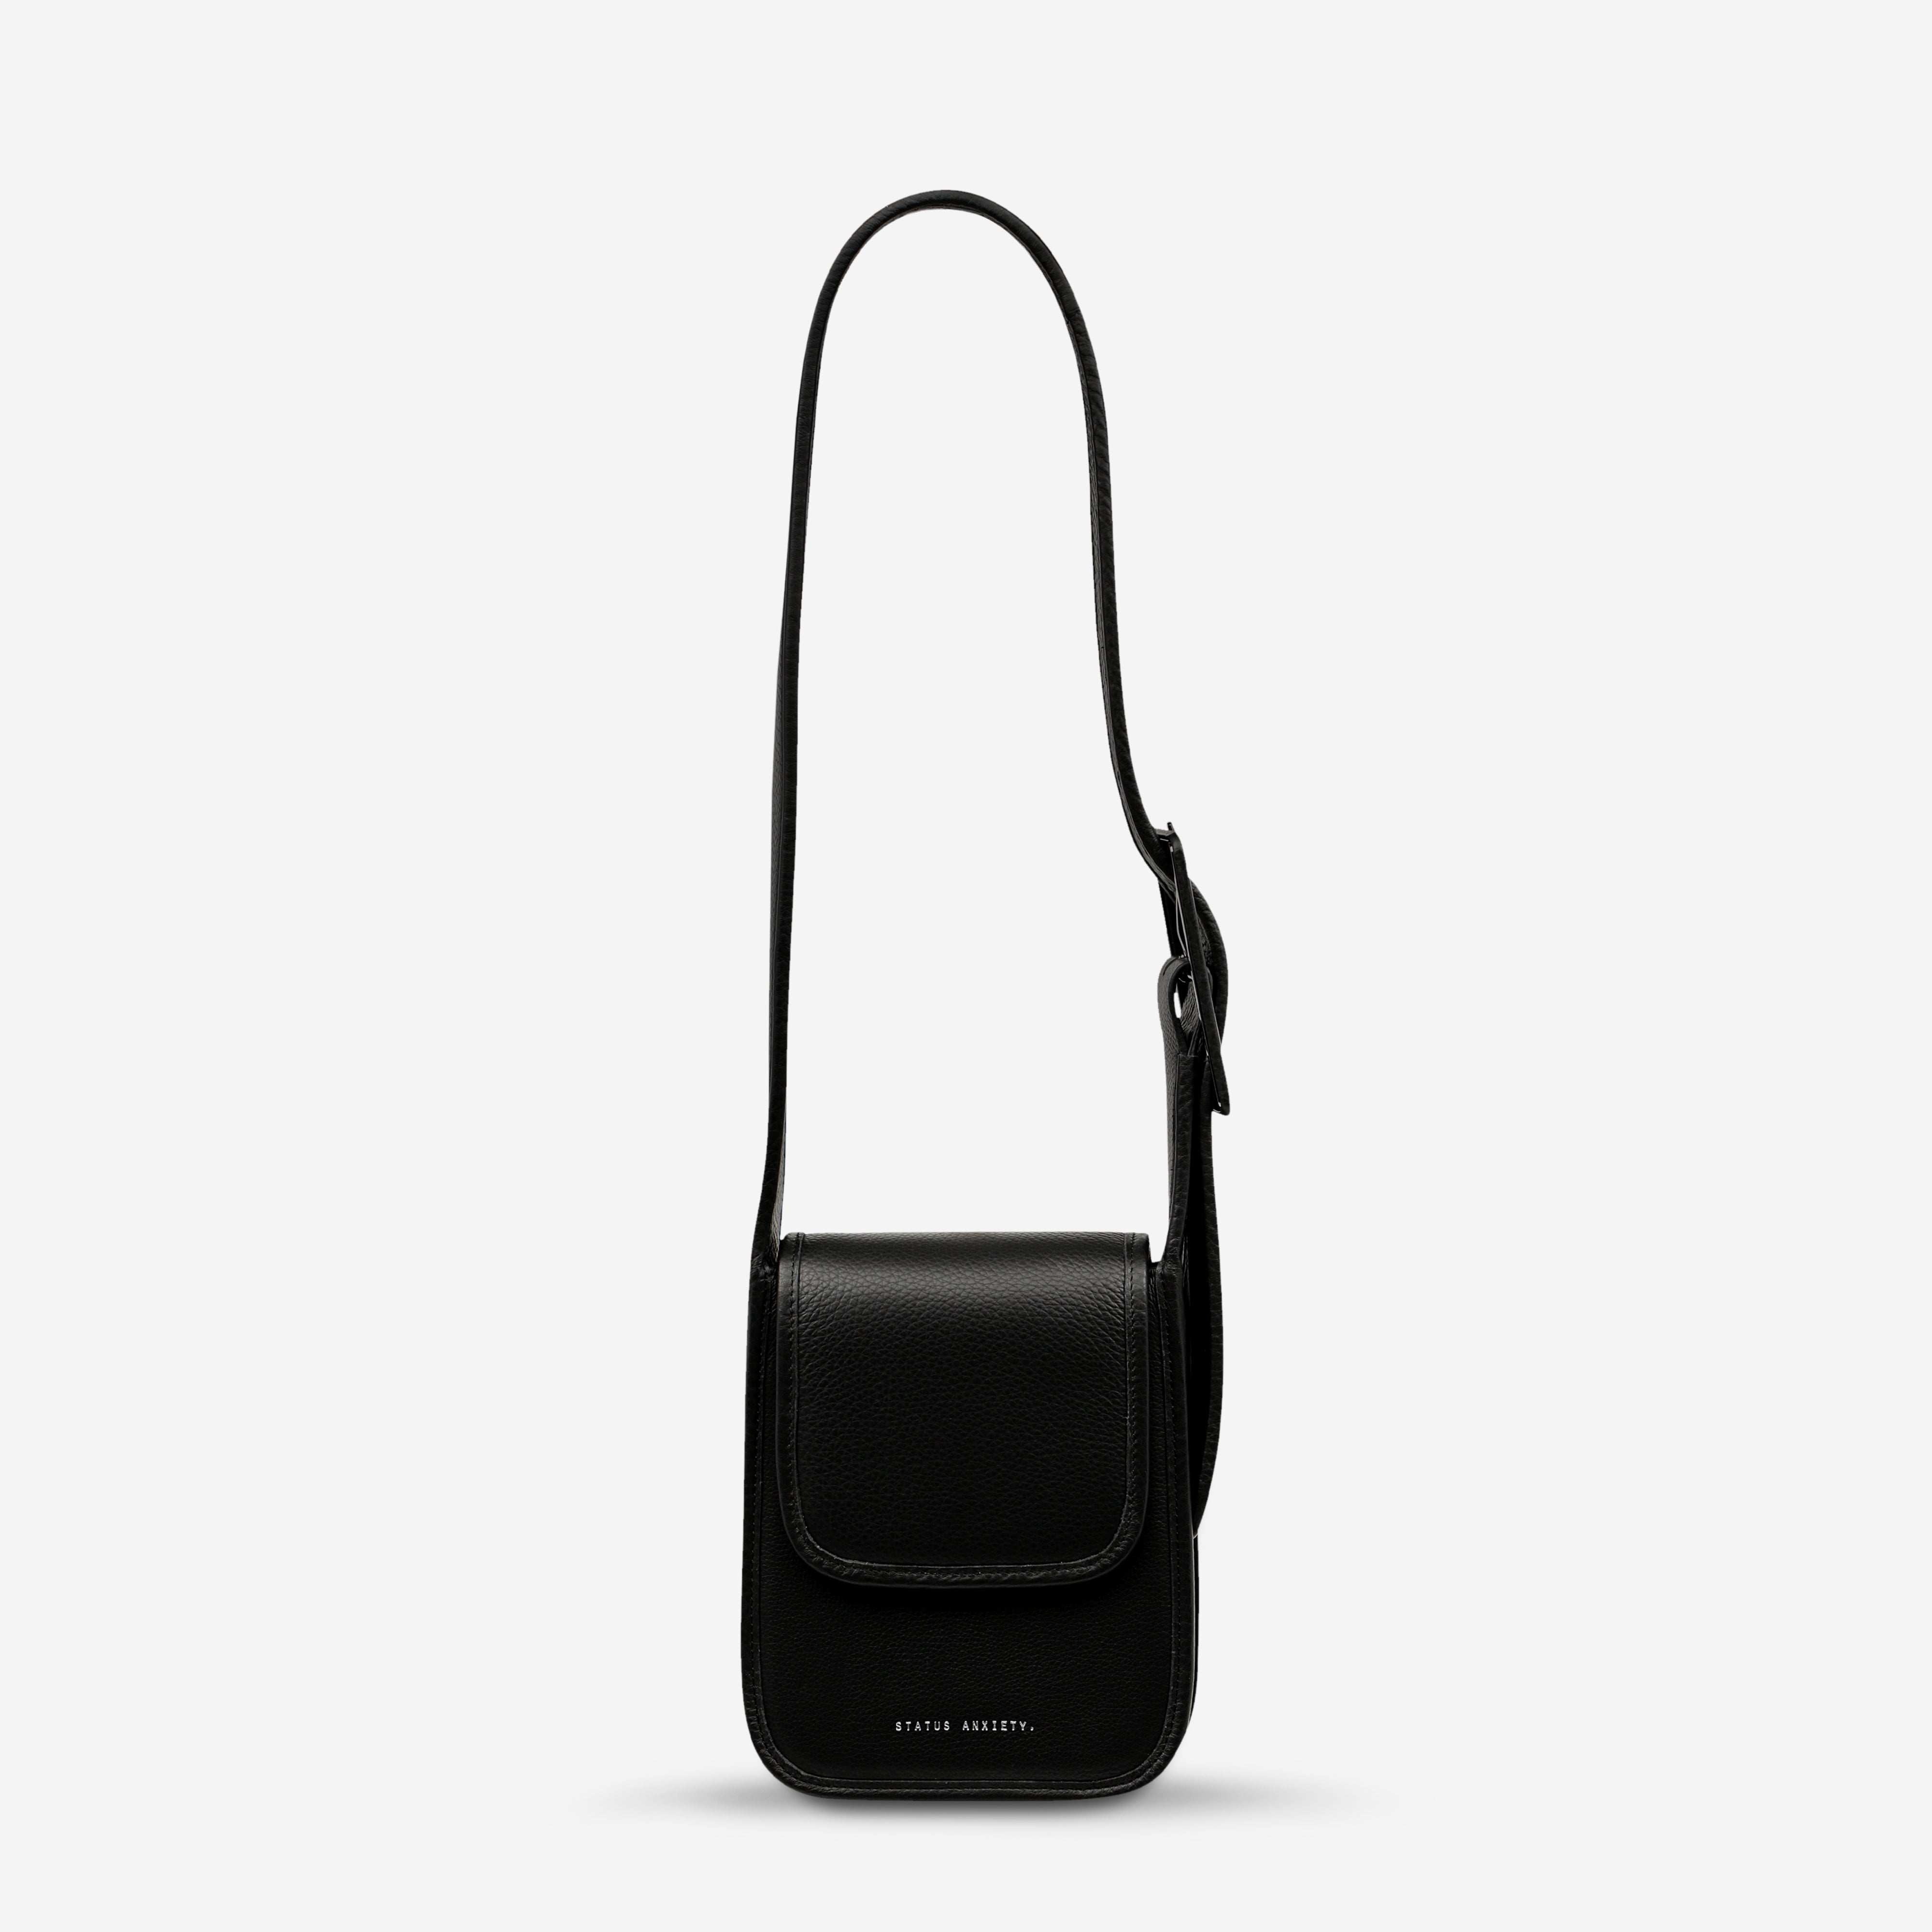 Status Anxiety Perplex Women's Leather Bag Black